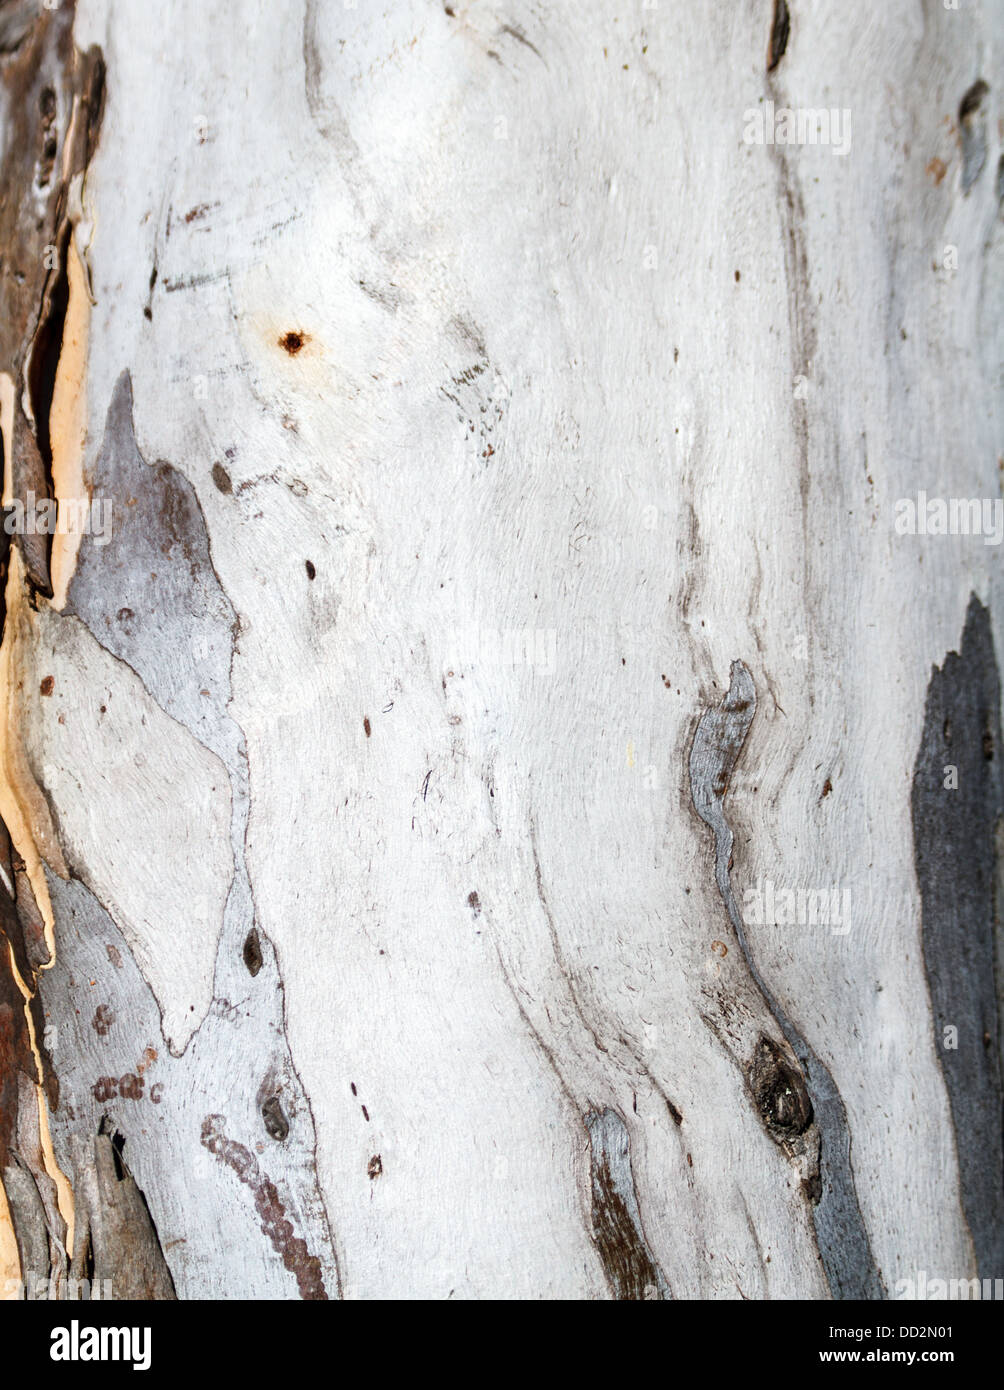 Pale white eucalyptus bark of an Australian Paperbark Eucalyptus Tree making an interesting textured background. Stock Photo